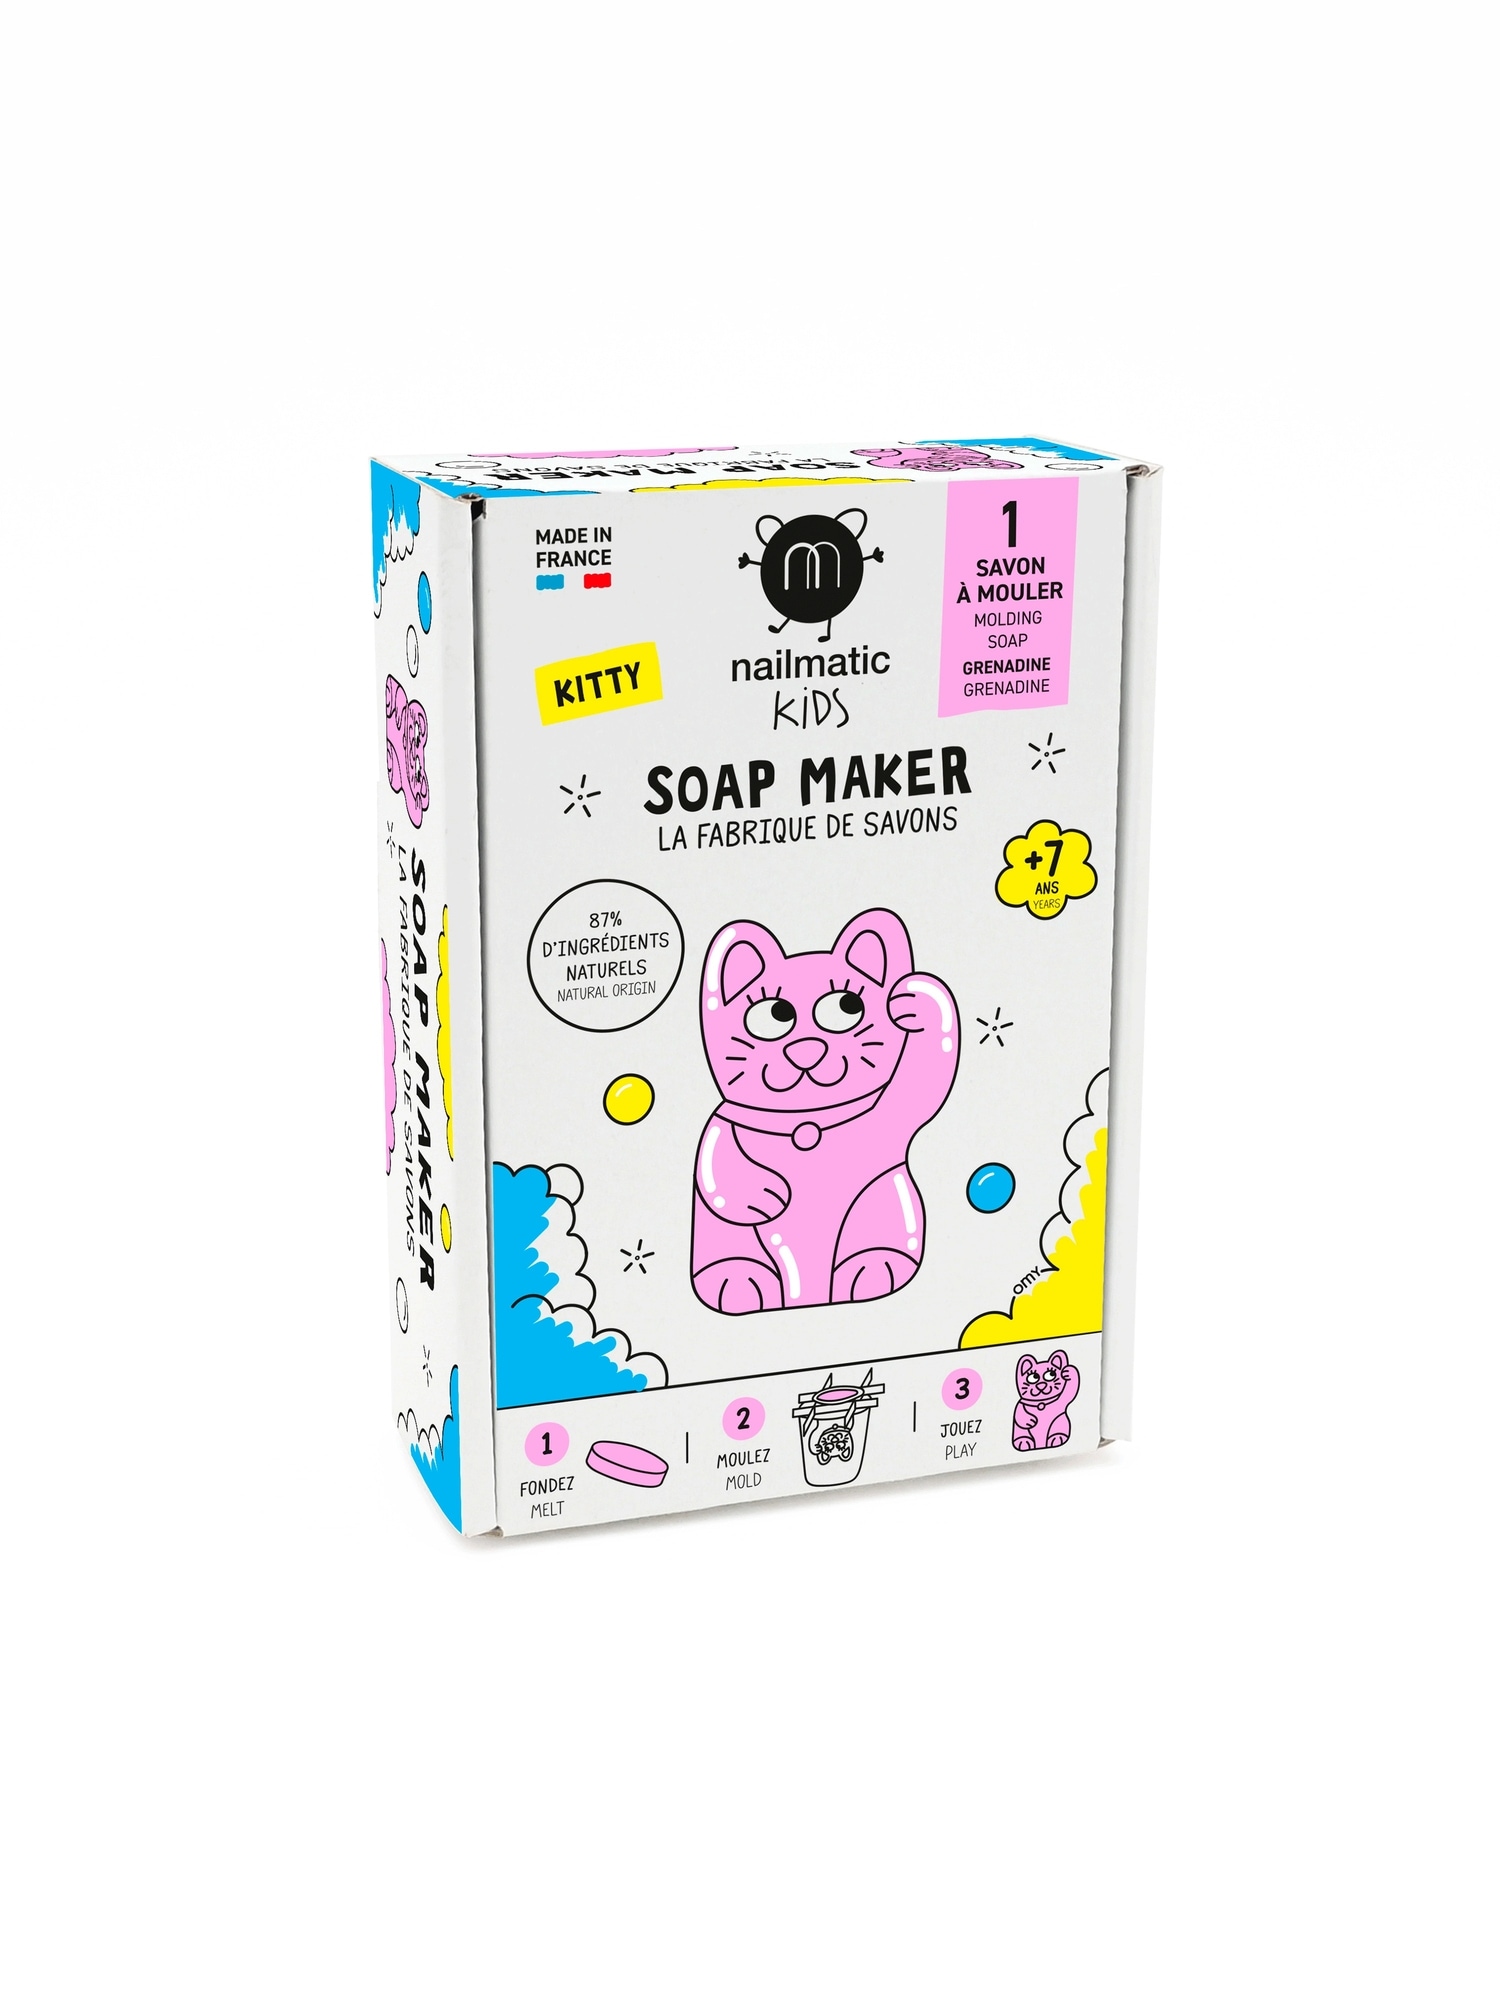 Gap Kitty Soap Maker